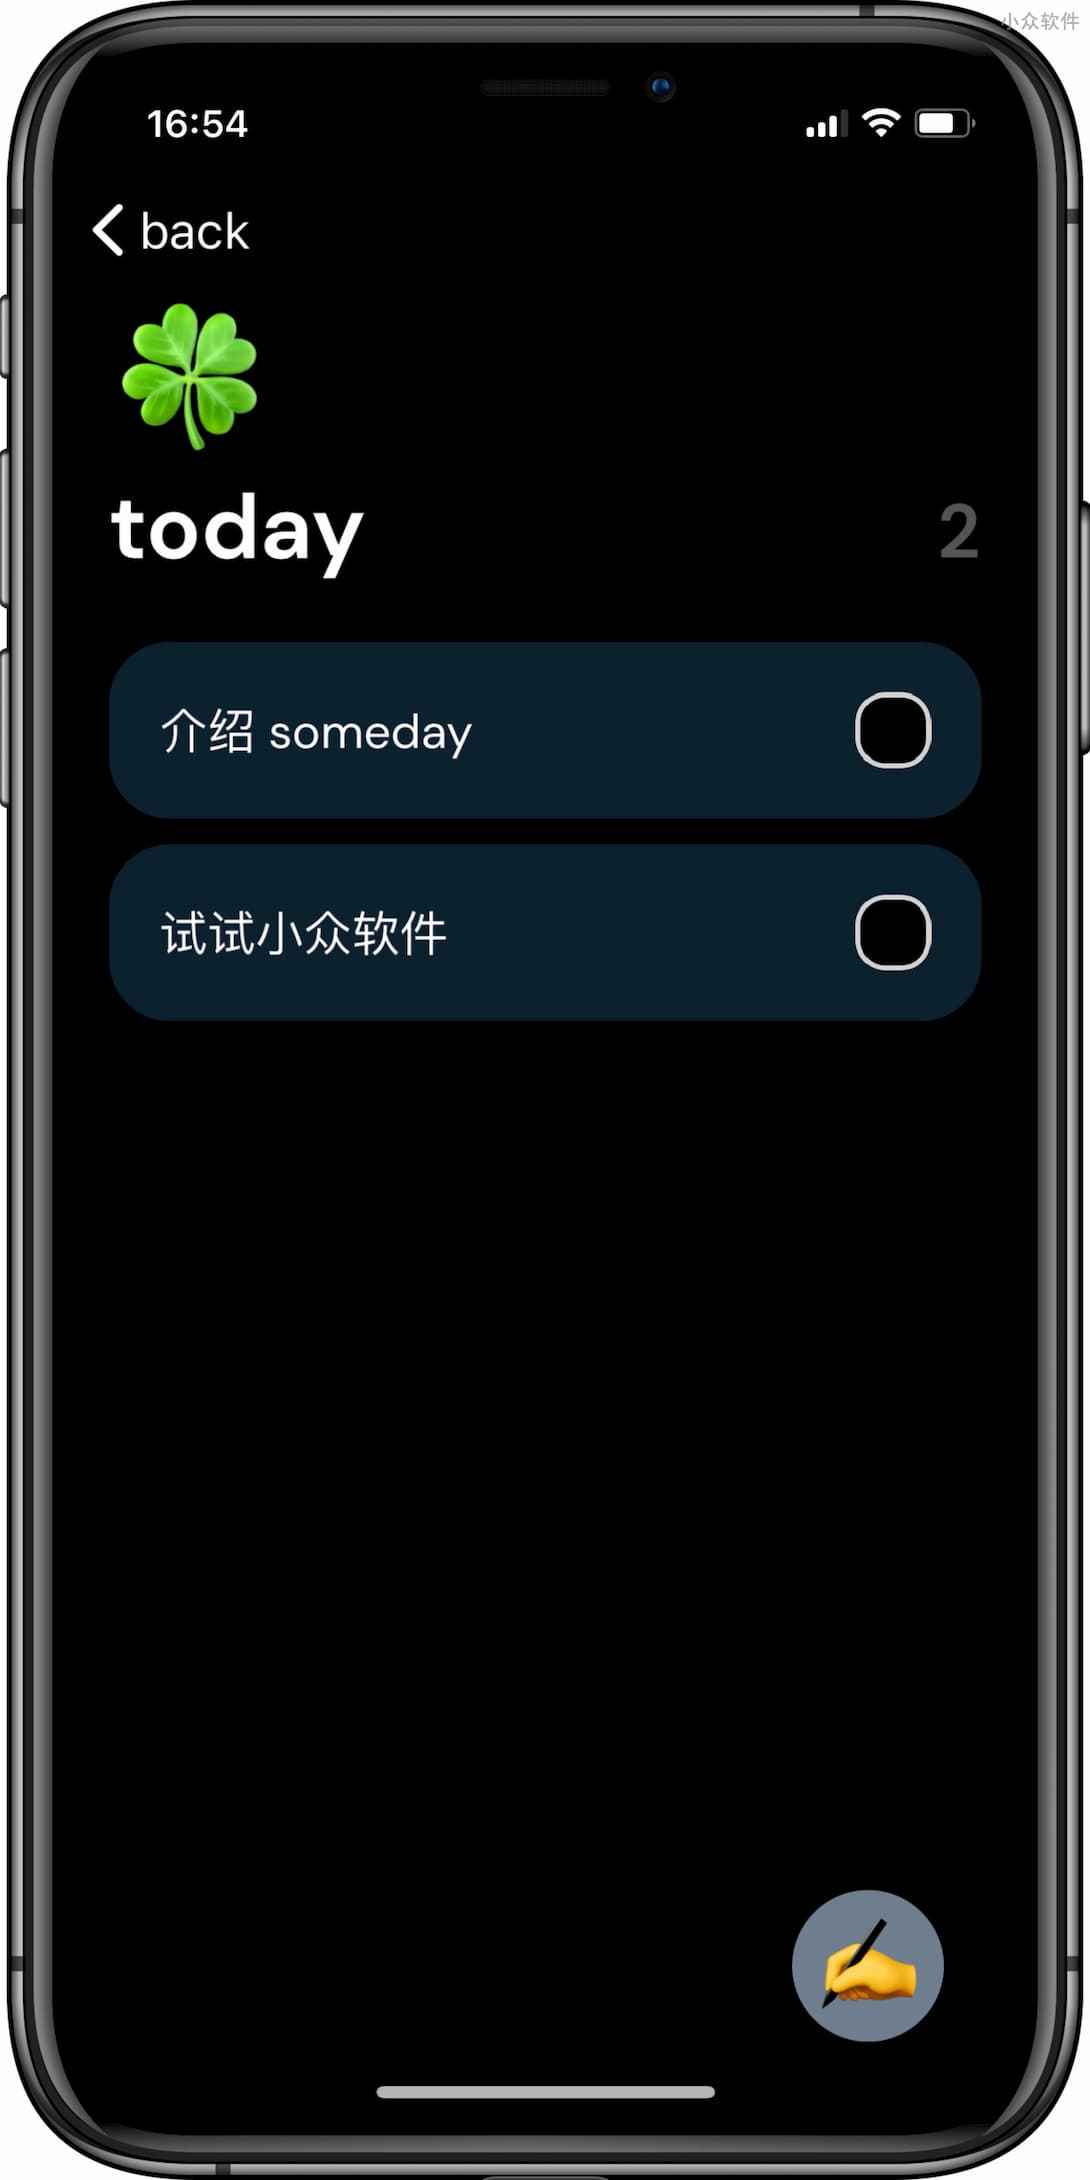 someday - 极简化任务管理，只有 3 个分类：今天、明天和某天[iPhone] 2